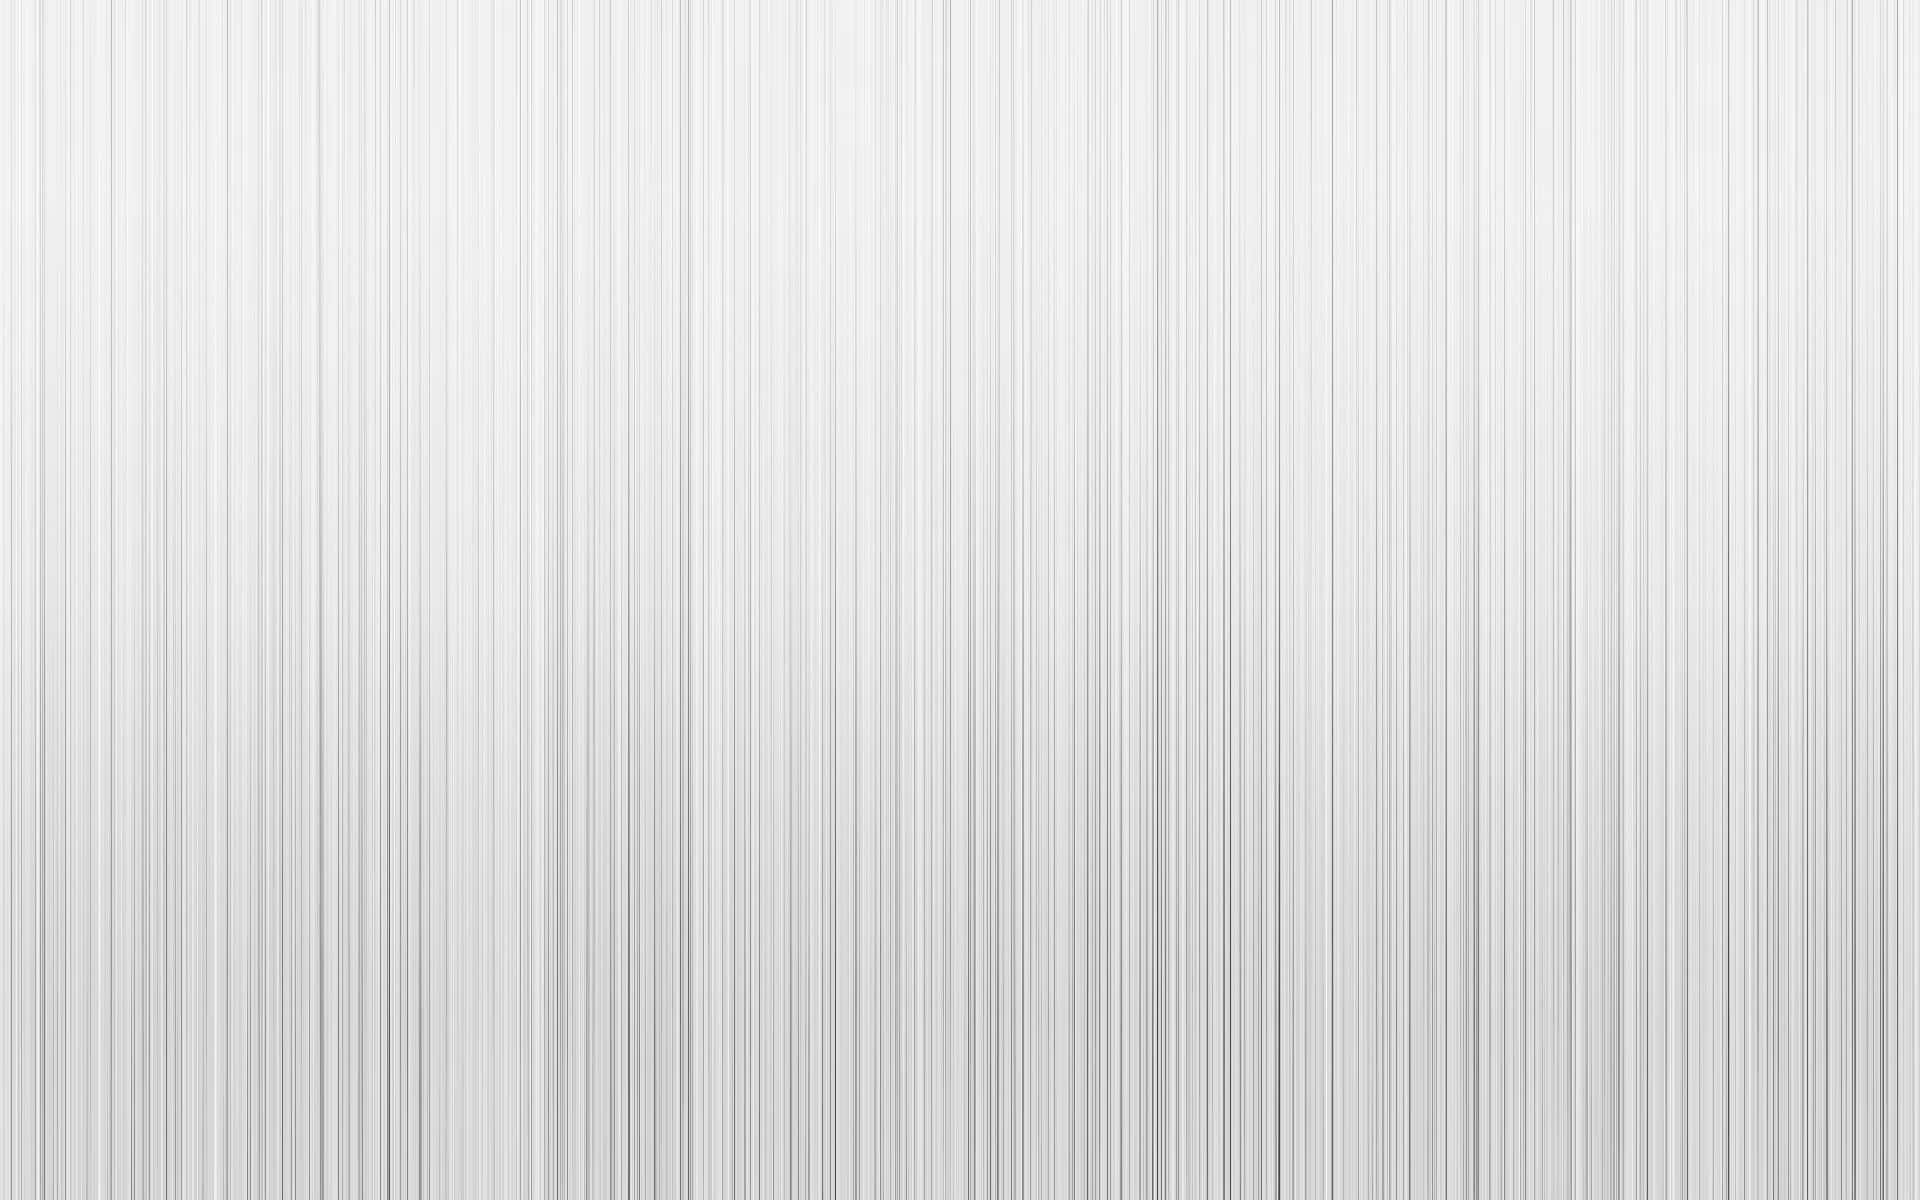 A Minimalistic Light Gray Background